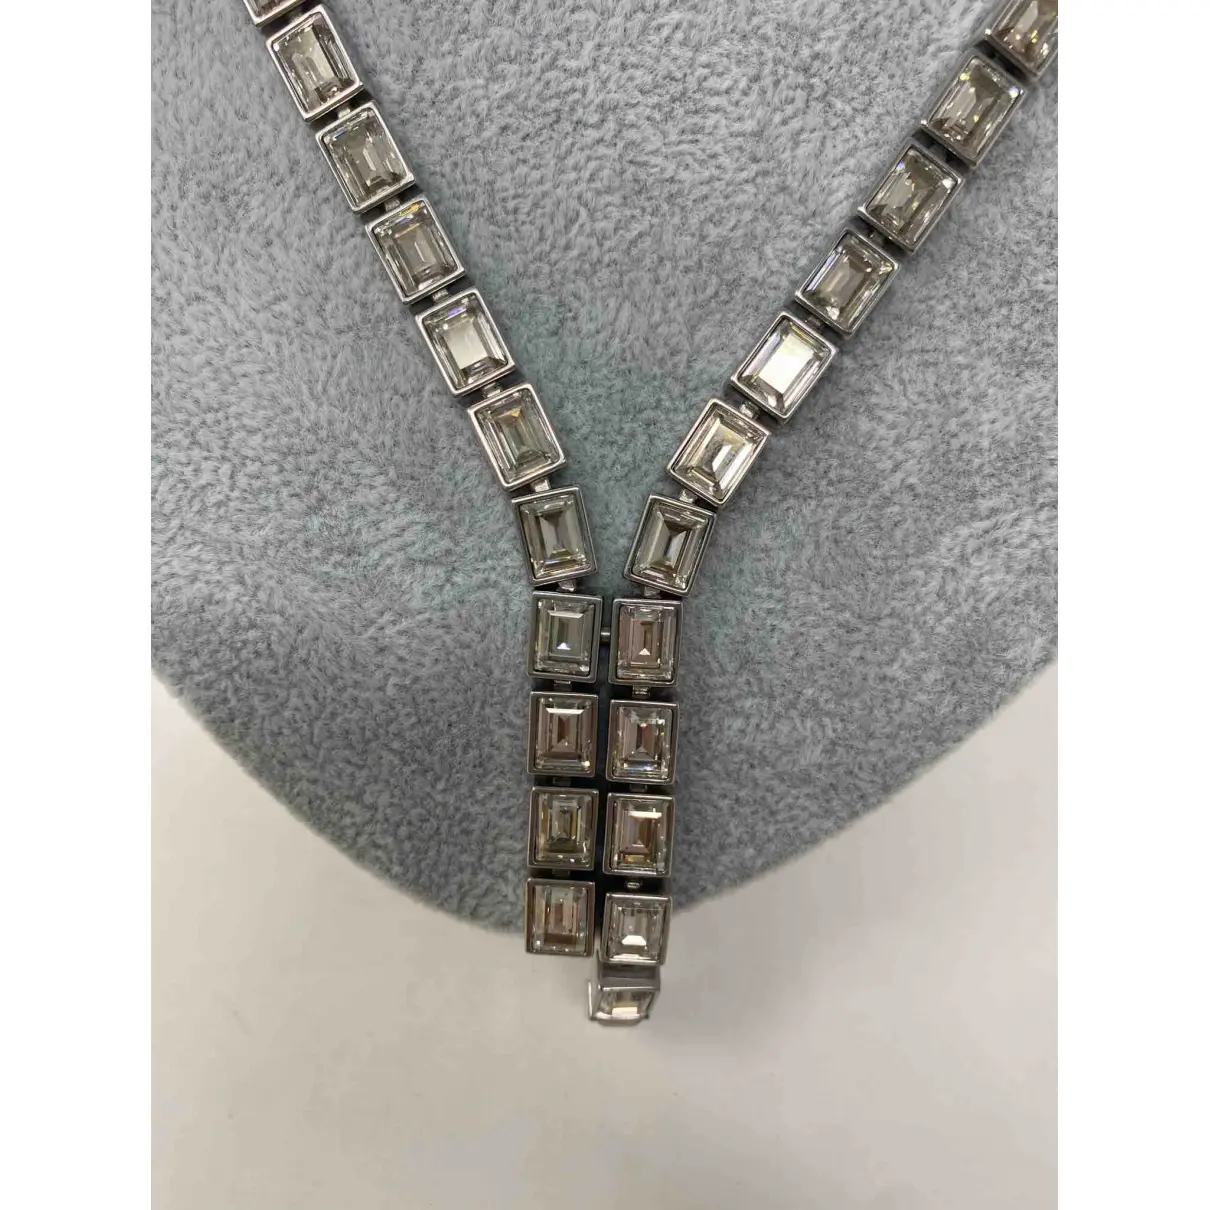 Buy Swarovski Atelier Silver necklace online